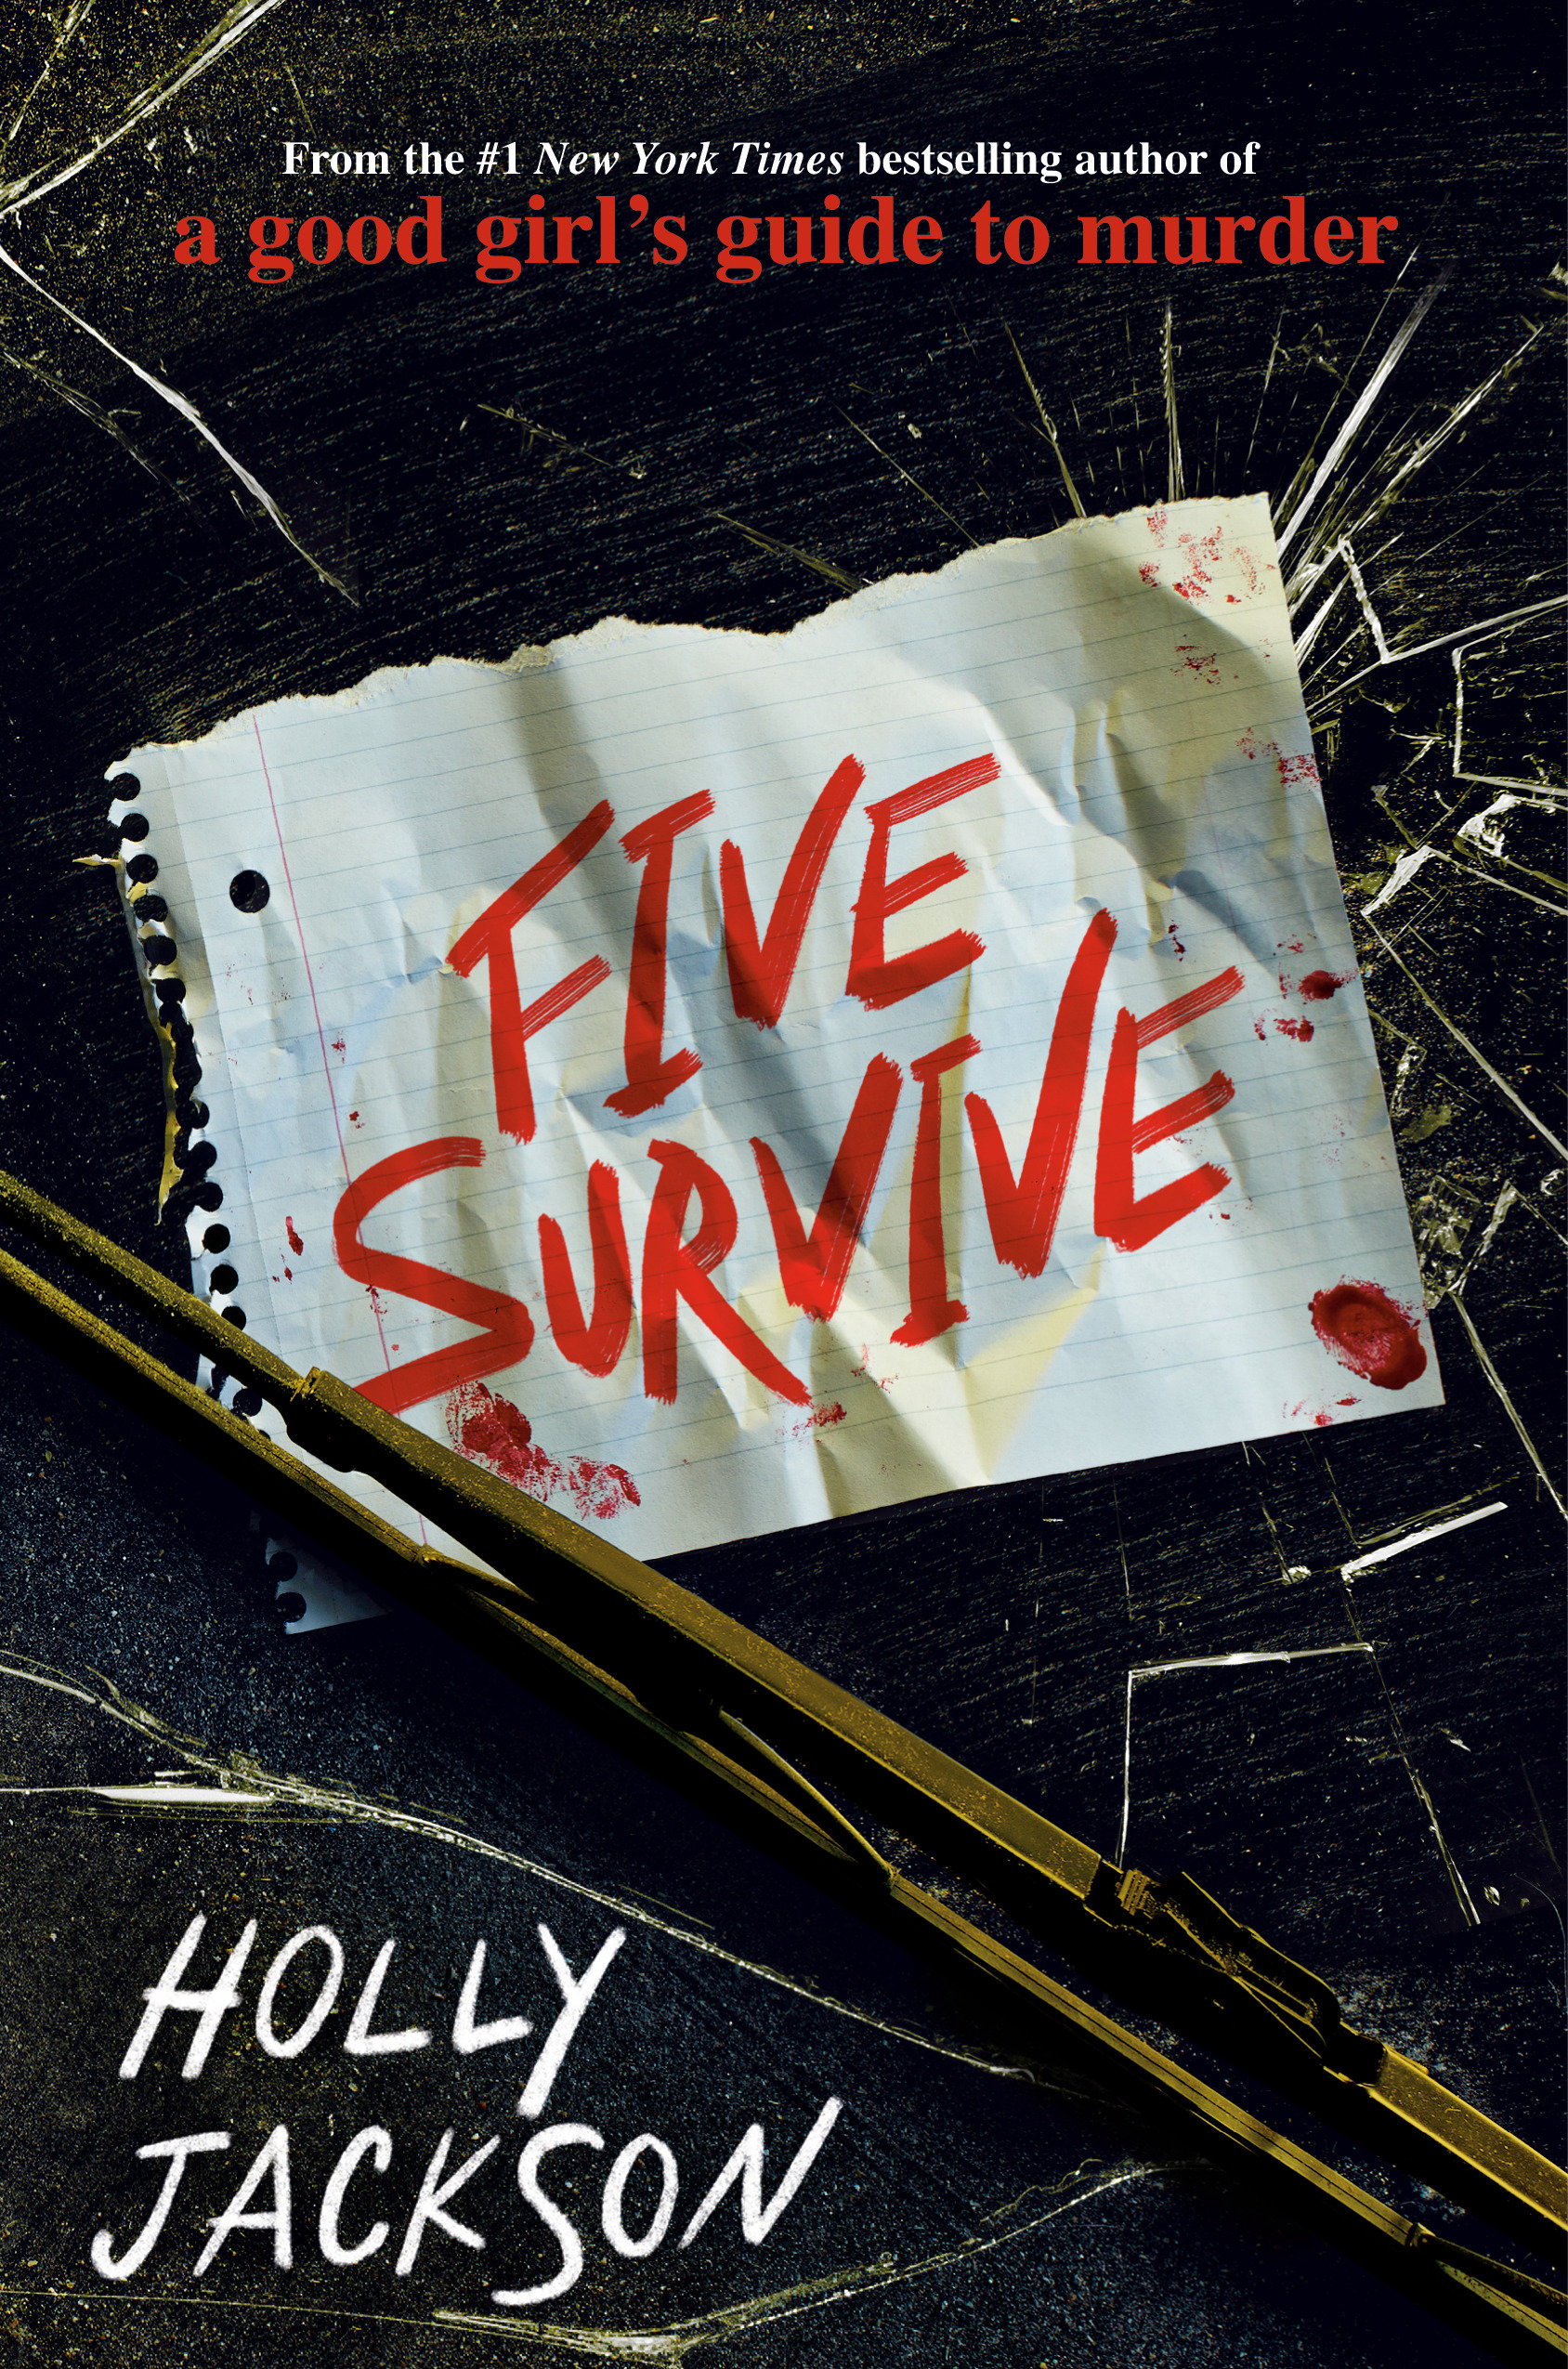 Five Survive (Hardcover Book)